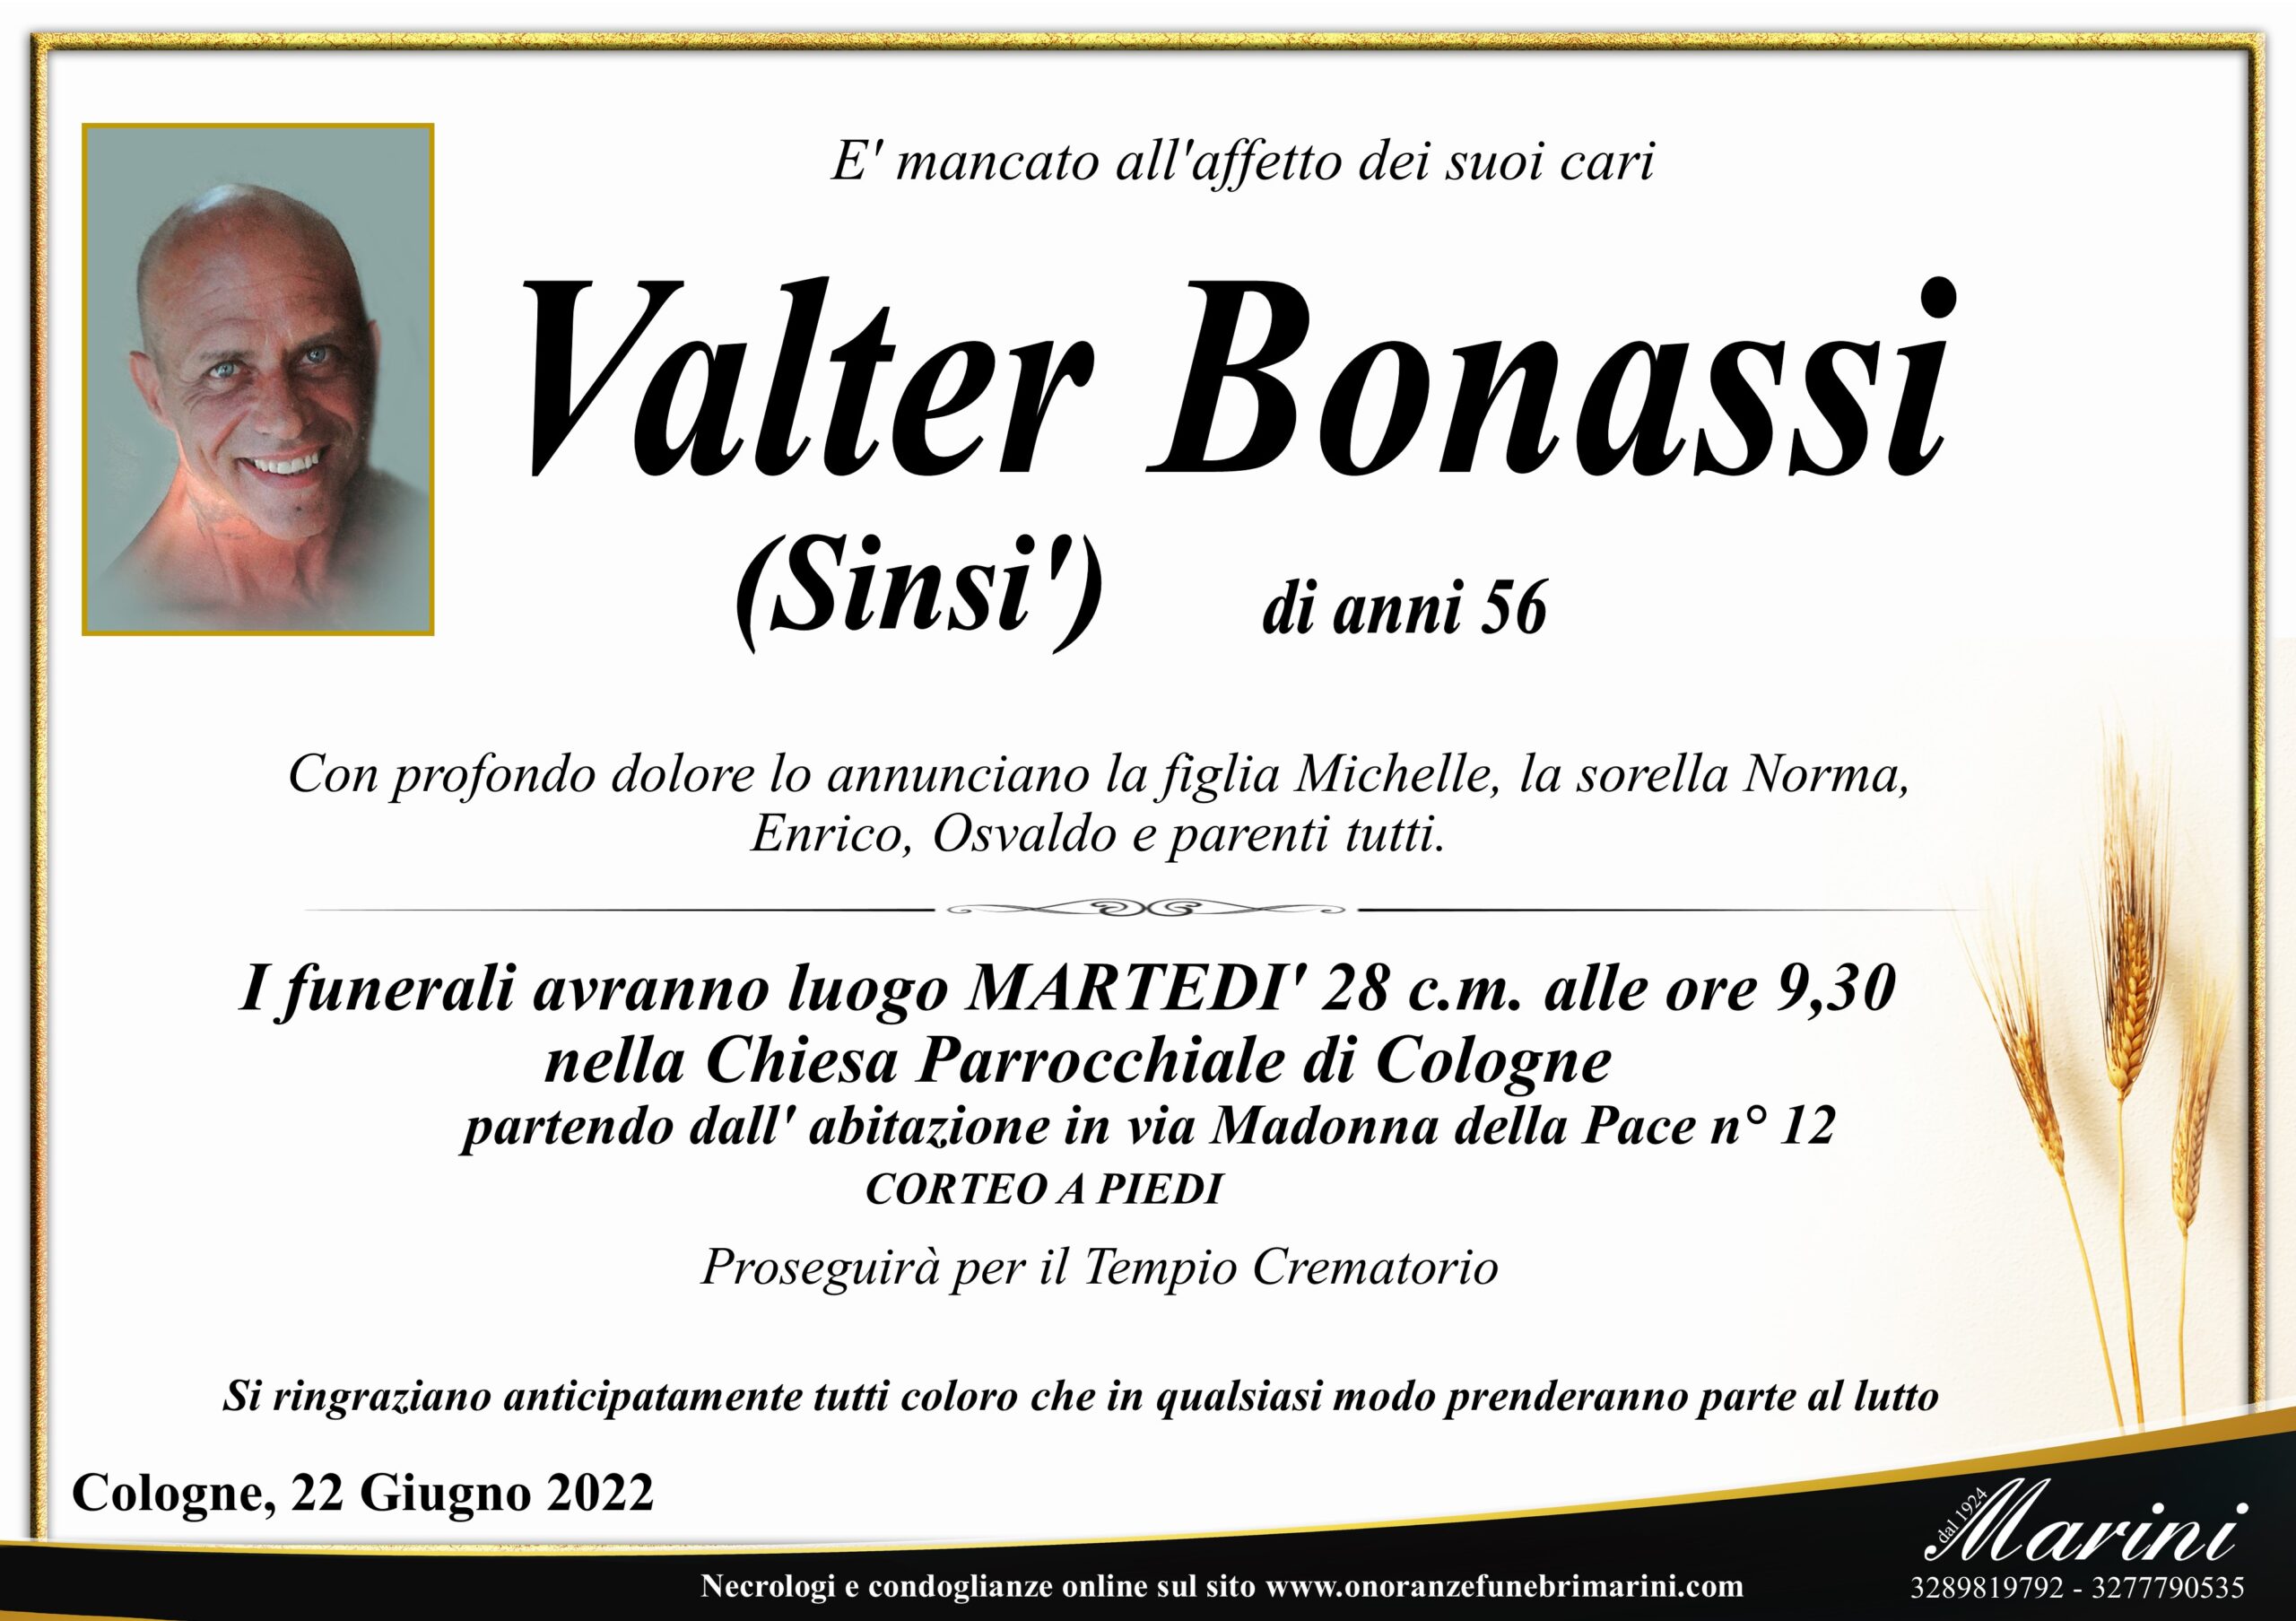 Valter Bonassi